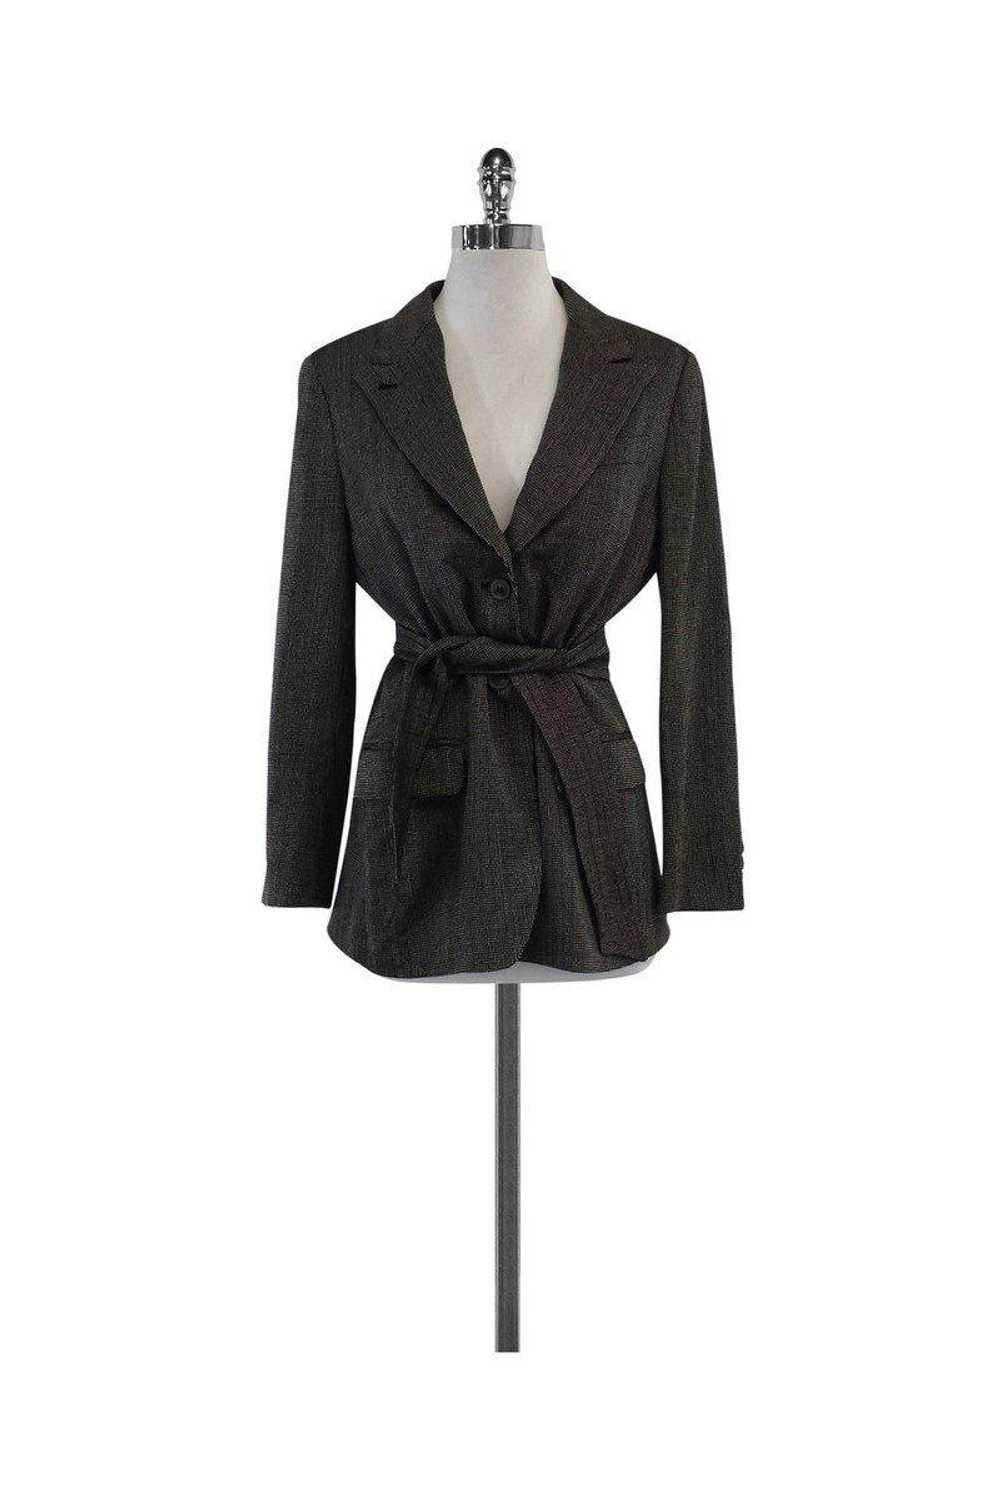 Max Mara - Black & White Wool Tweed Jacket Sz 8 - image 1